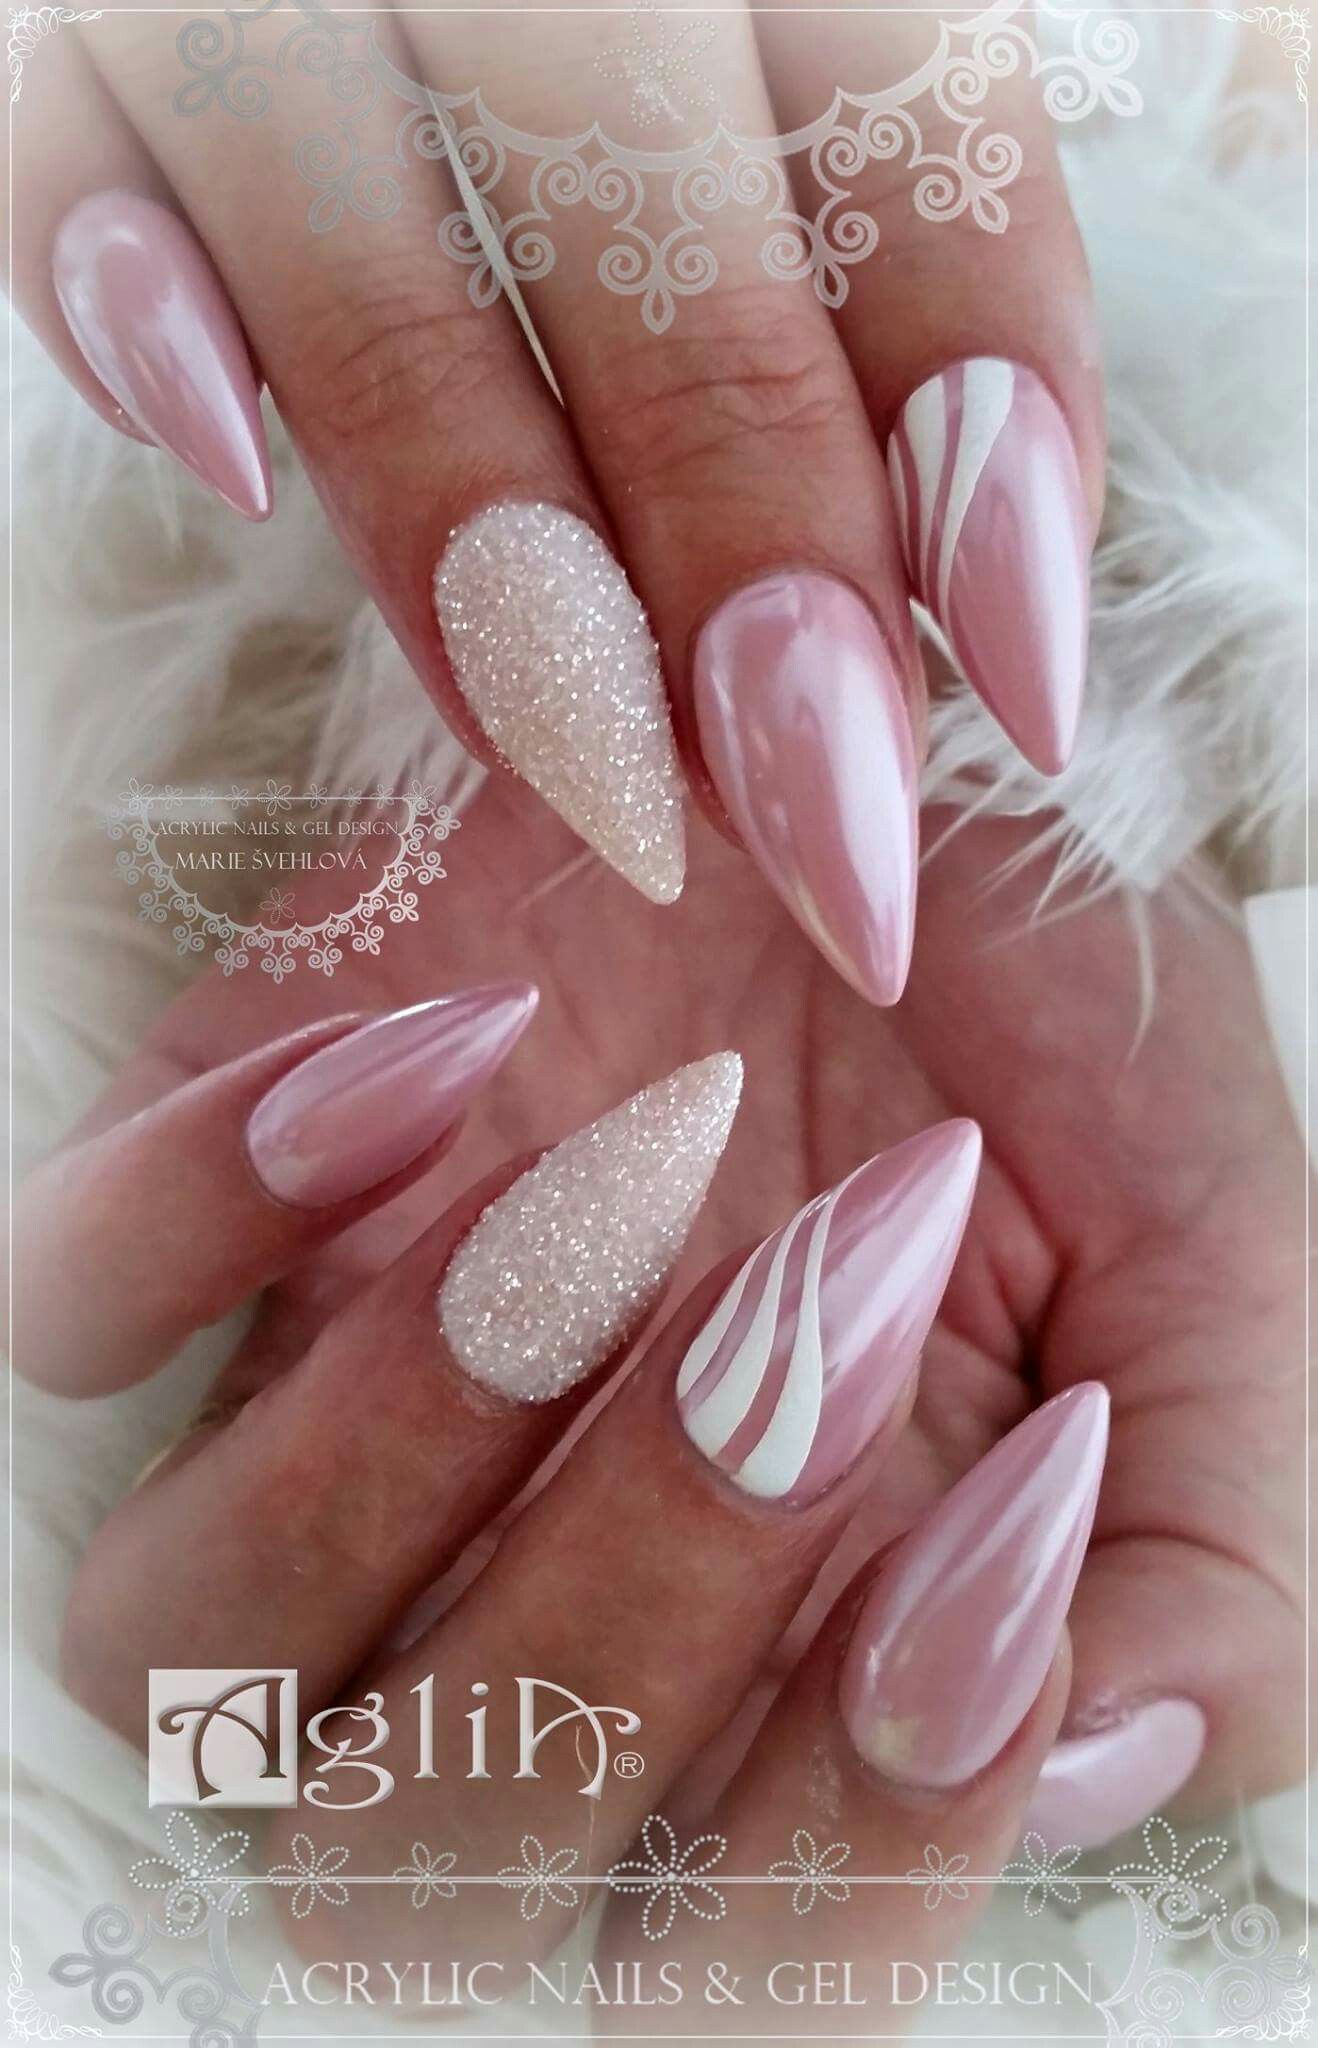 Acrylic Mail S Gel Design Chrome White Nails Pink Chrome Nails Pink Nails White Nail Designs